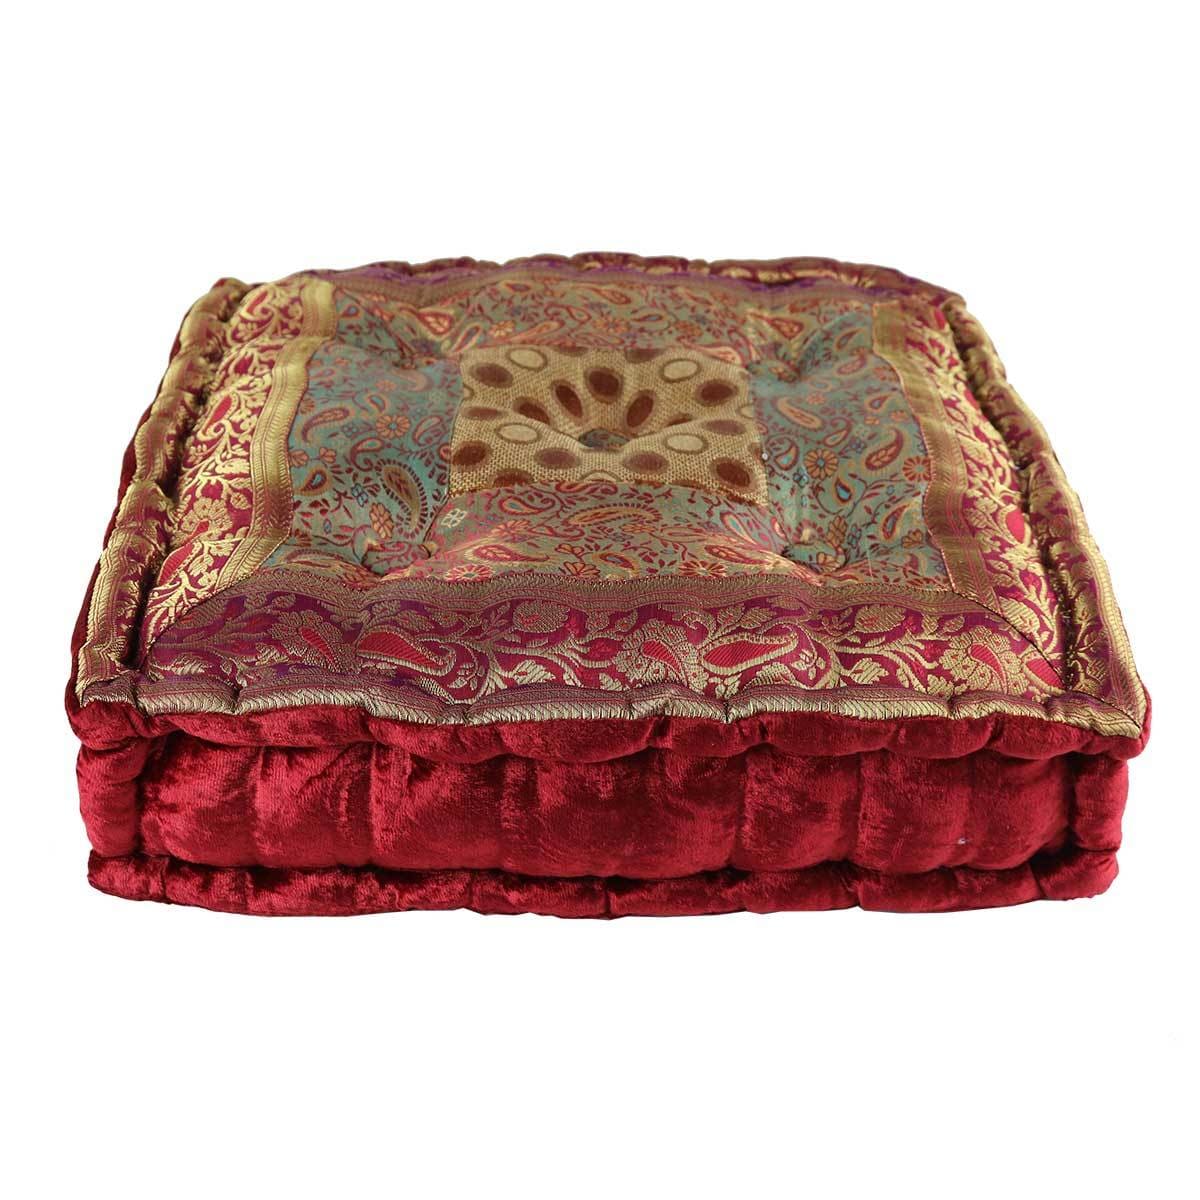 Shiraz Meditation Cushion